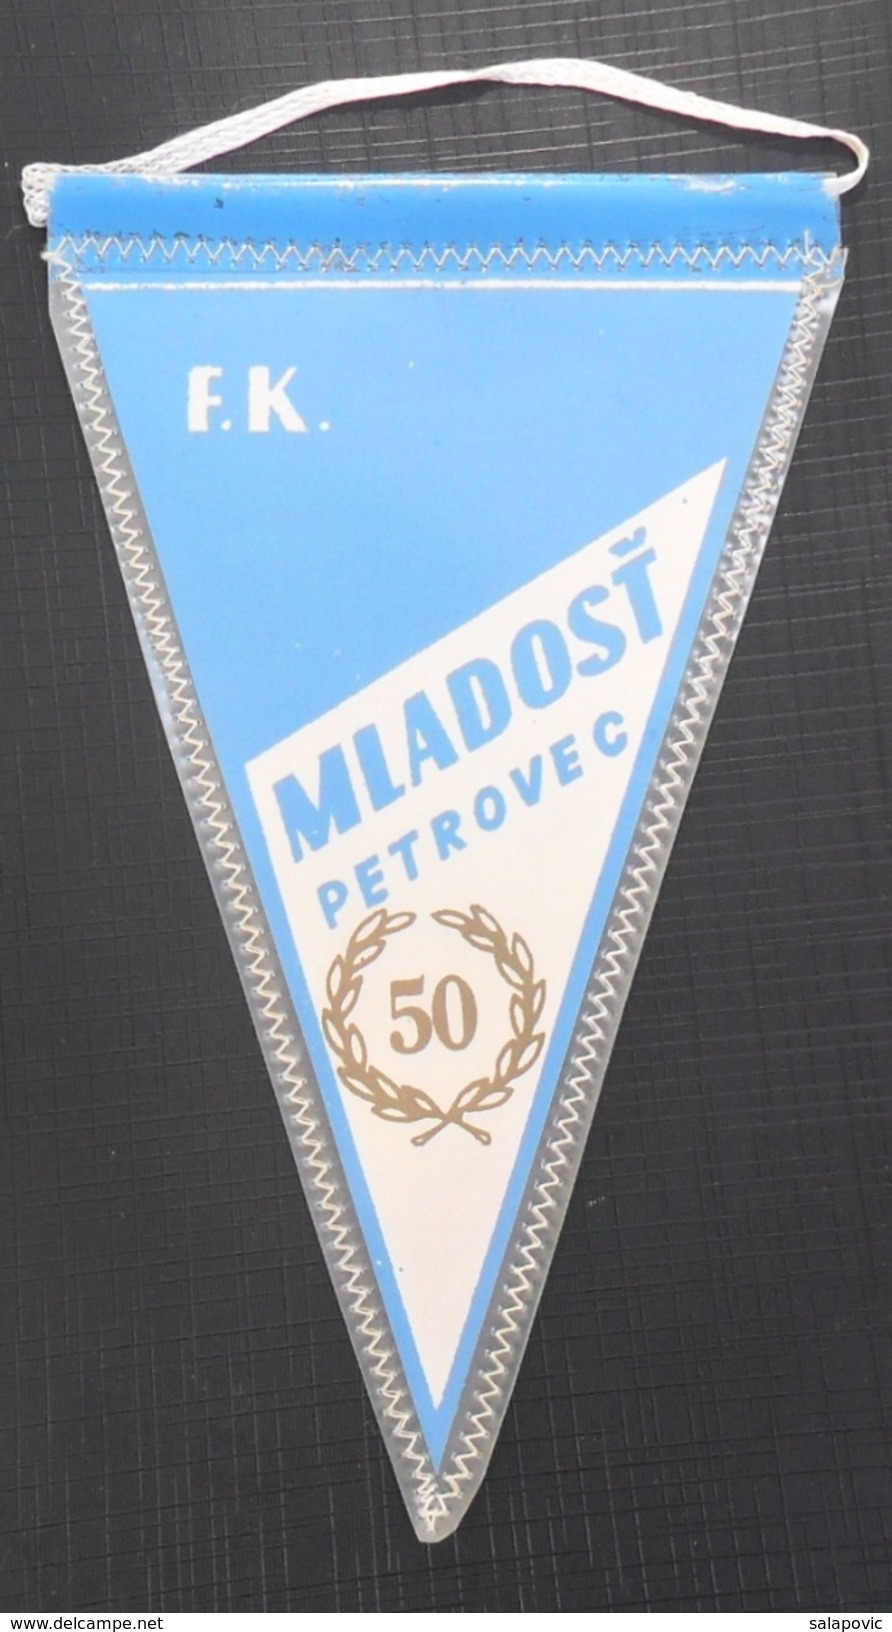 FK Mladost Petrovec, SERBIA FOOTBALL CLUB, CALCIO OLD PENNANT, SPORTS FLAG - Uniformes Recordatorios & Misc